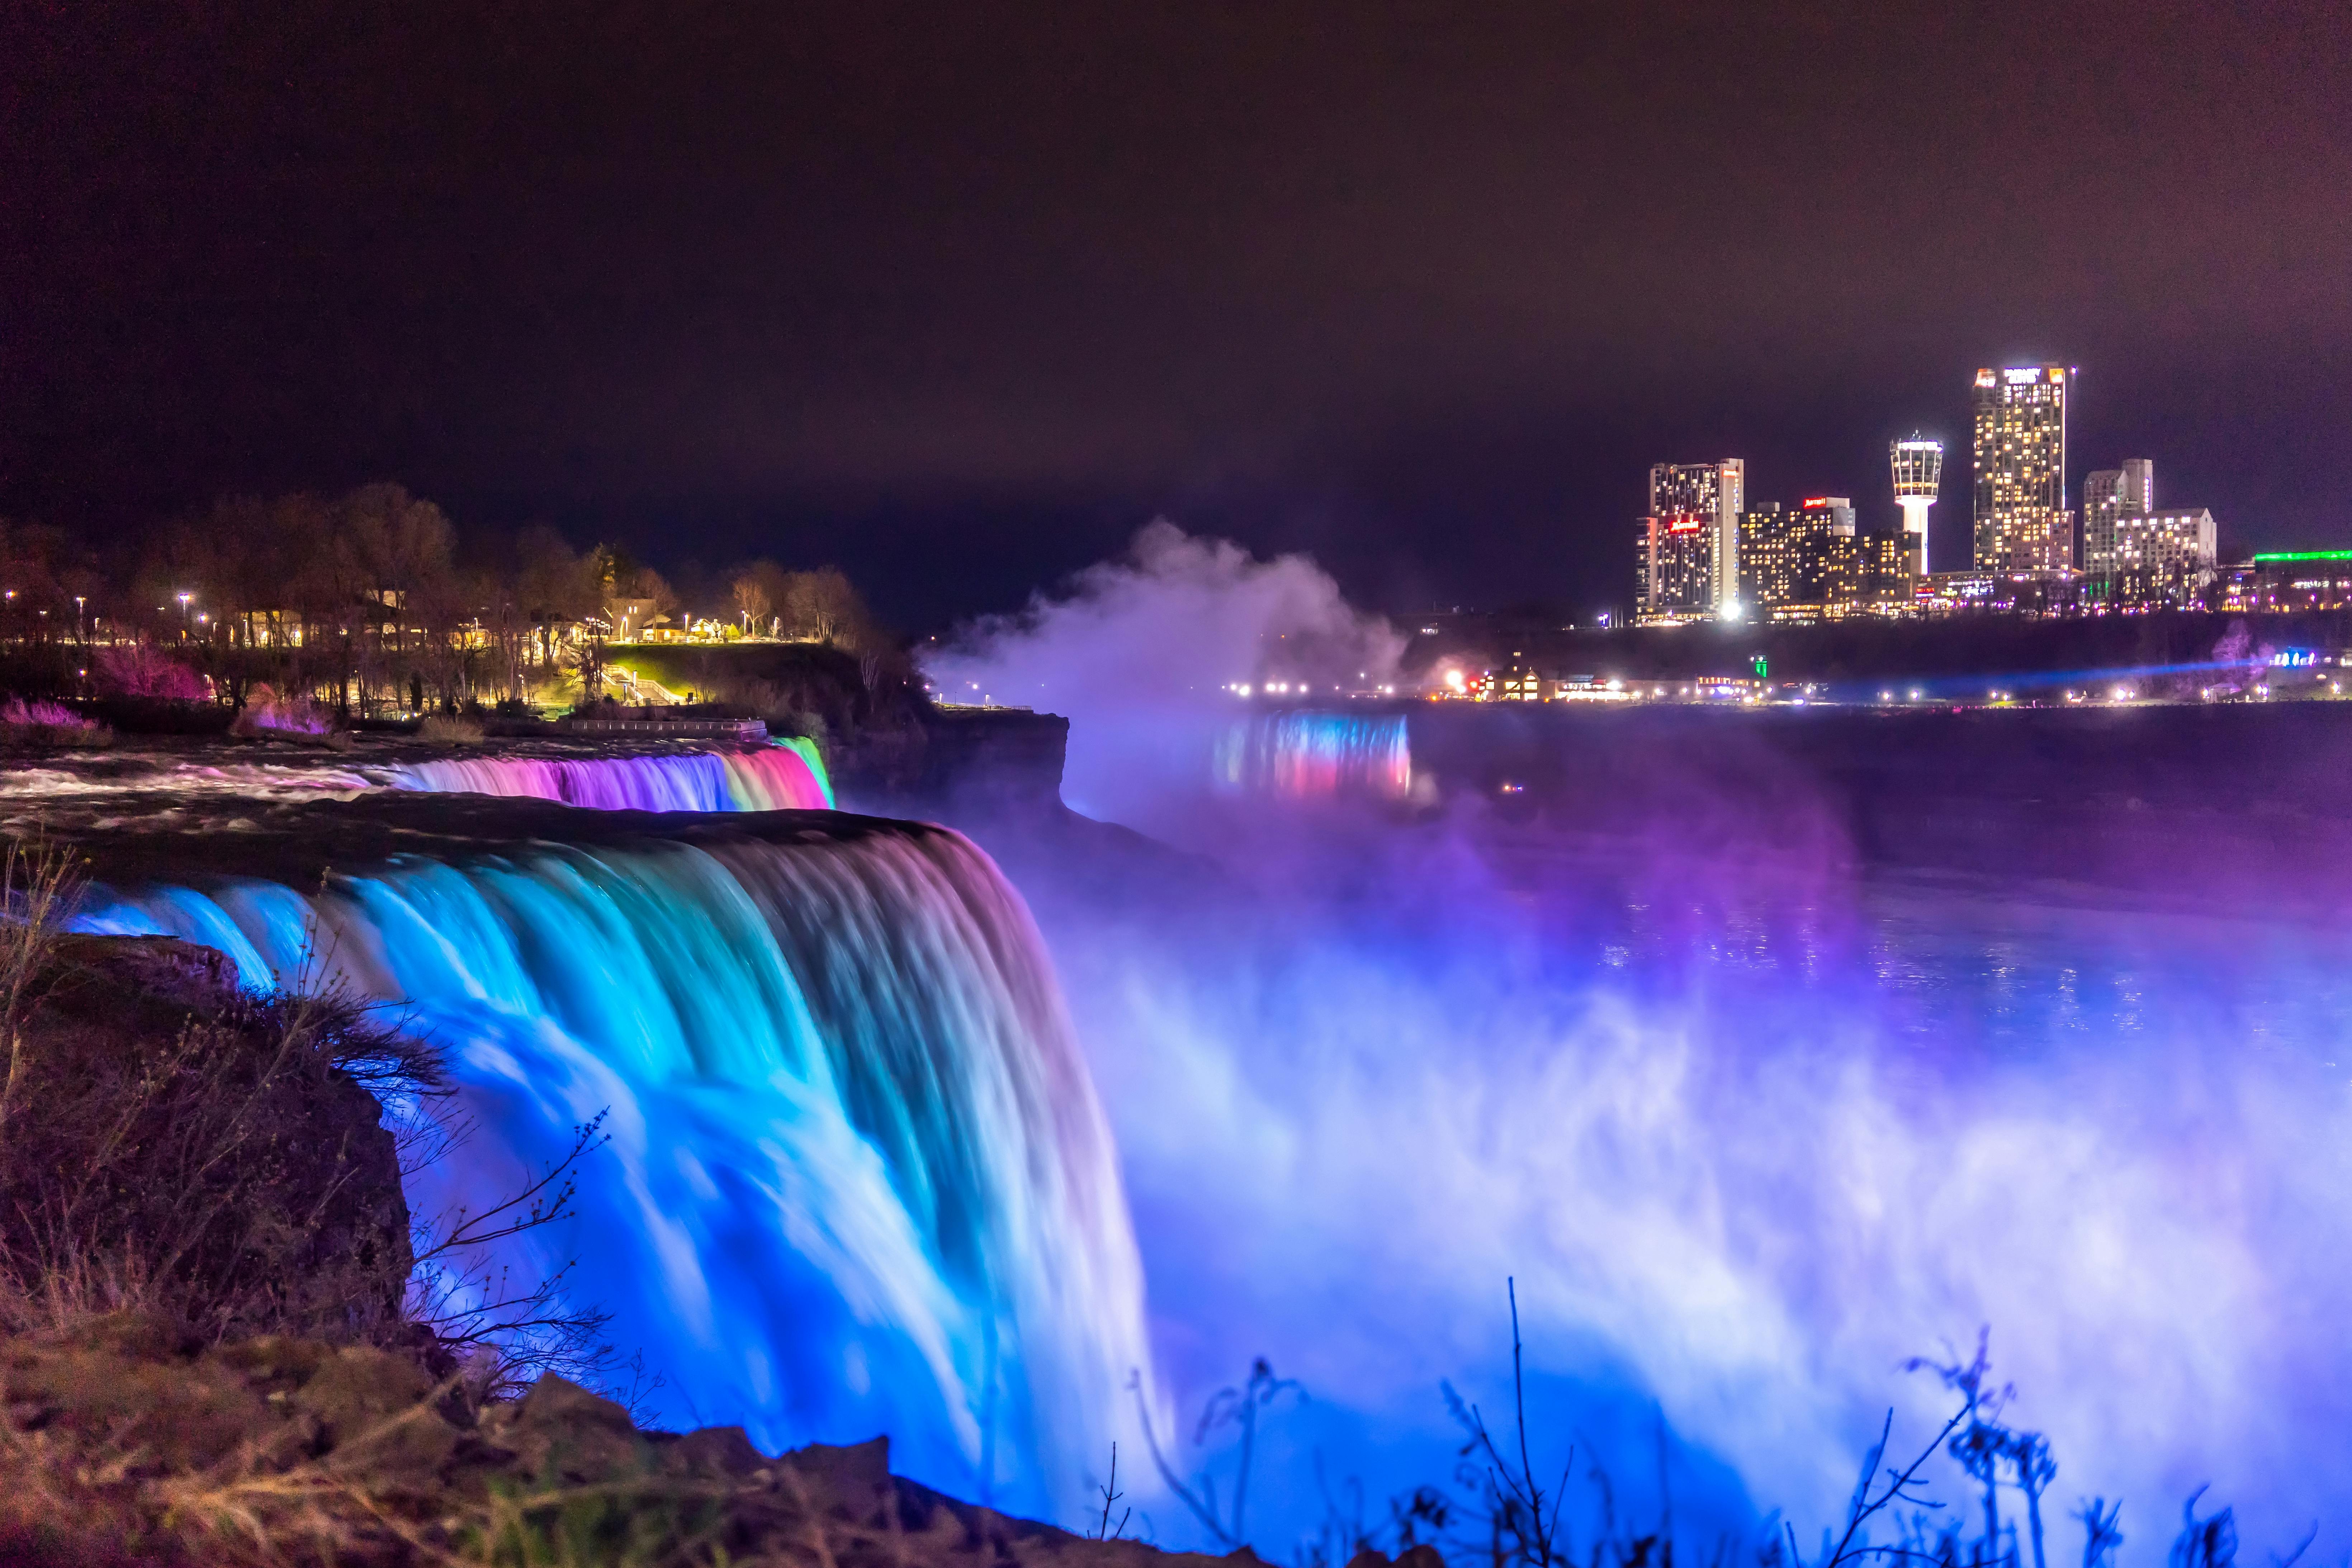 Niagara Falls at Night Illumination & Fireworks Tour from USA